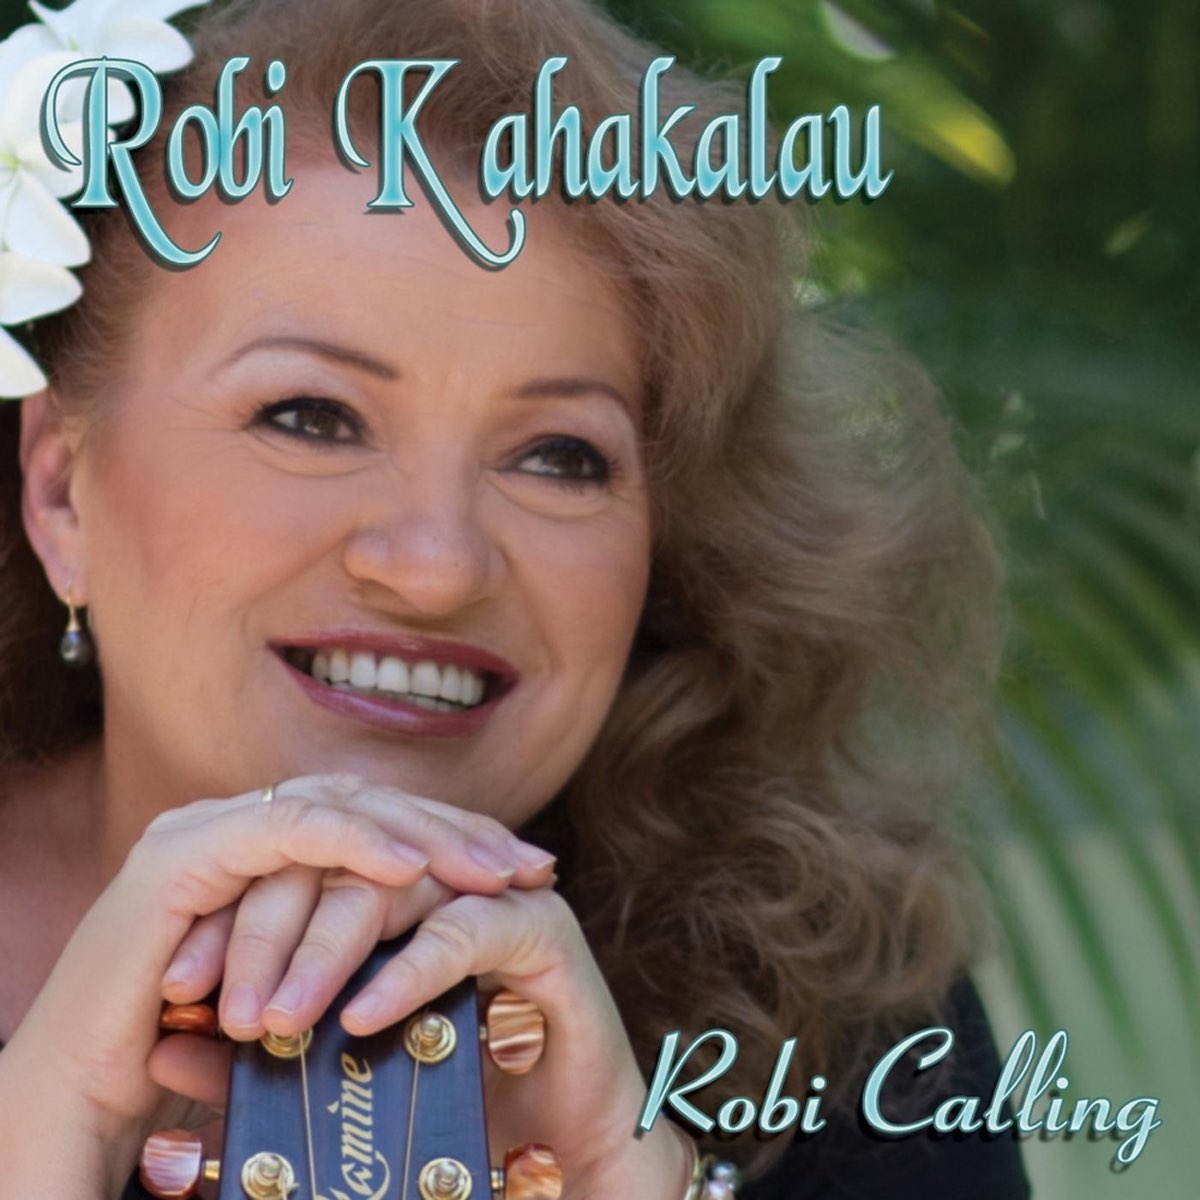 Robi Calling - Album by Robi Kahakalau - Apple Music